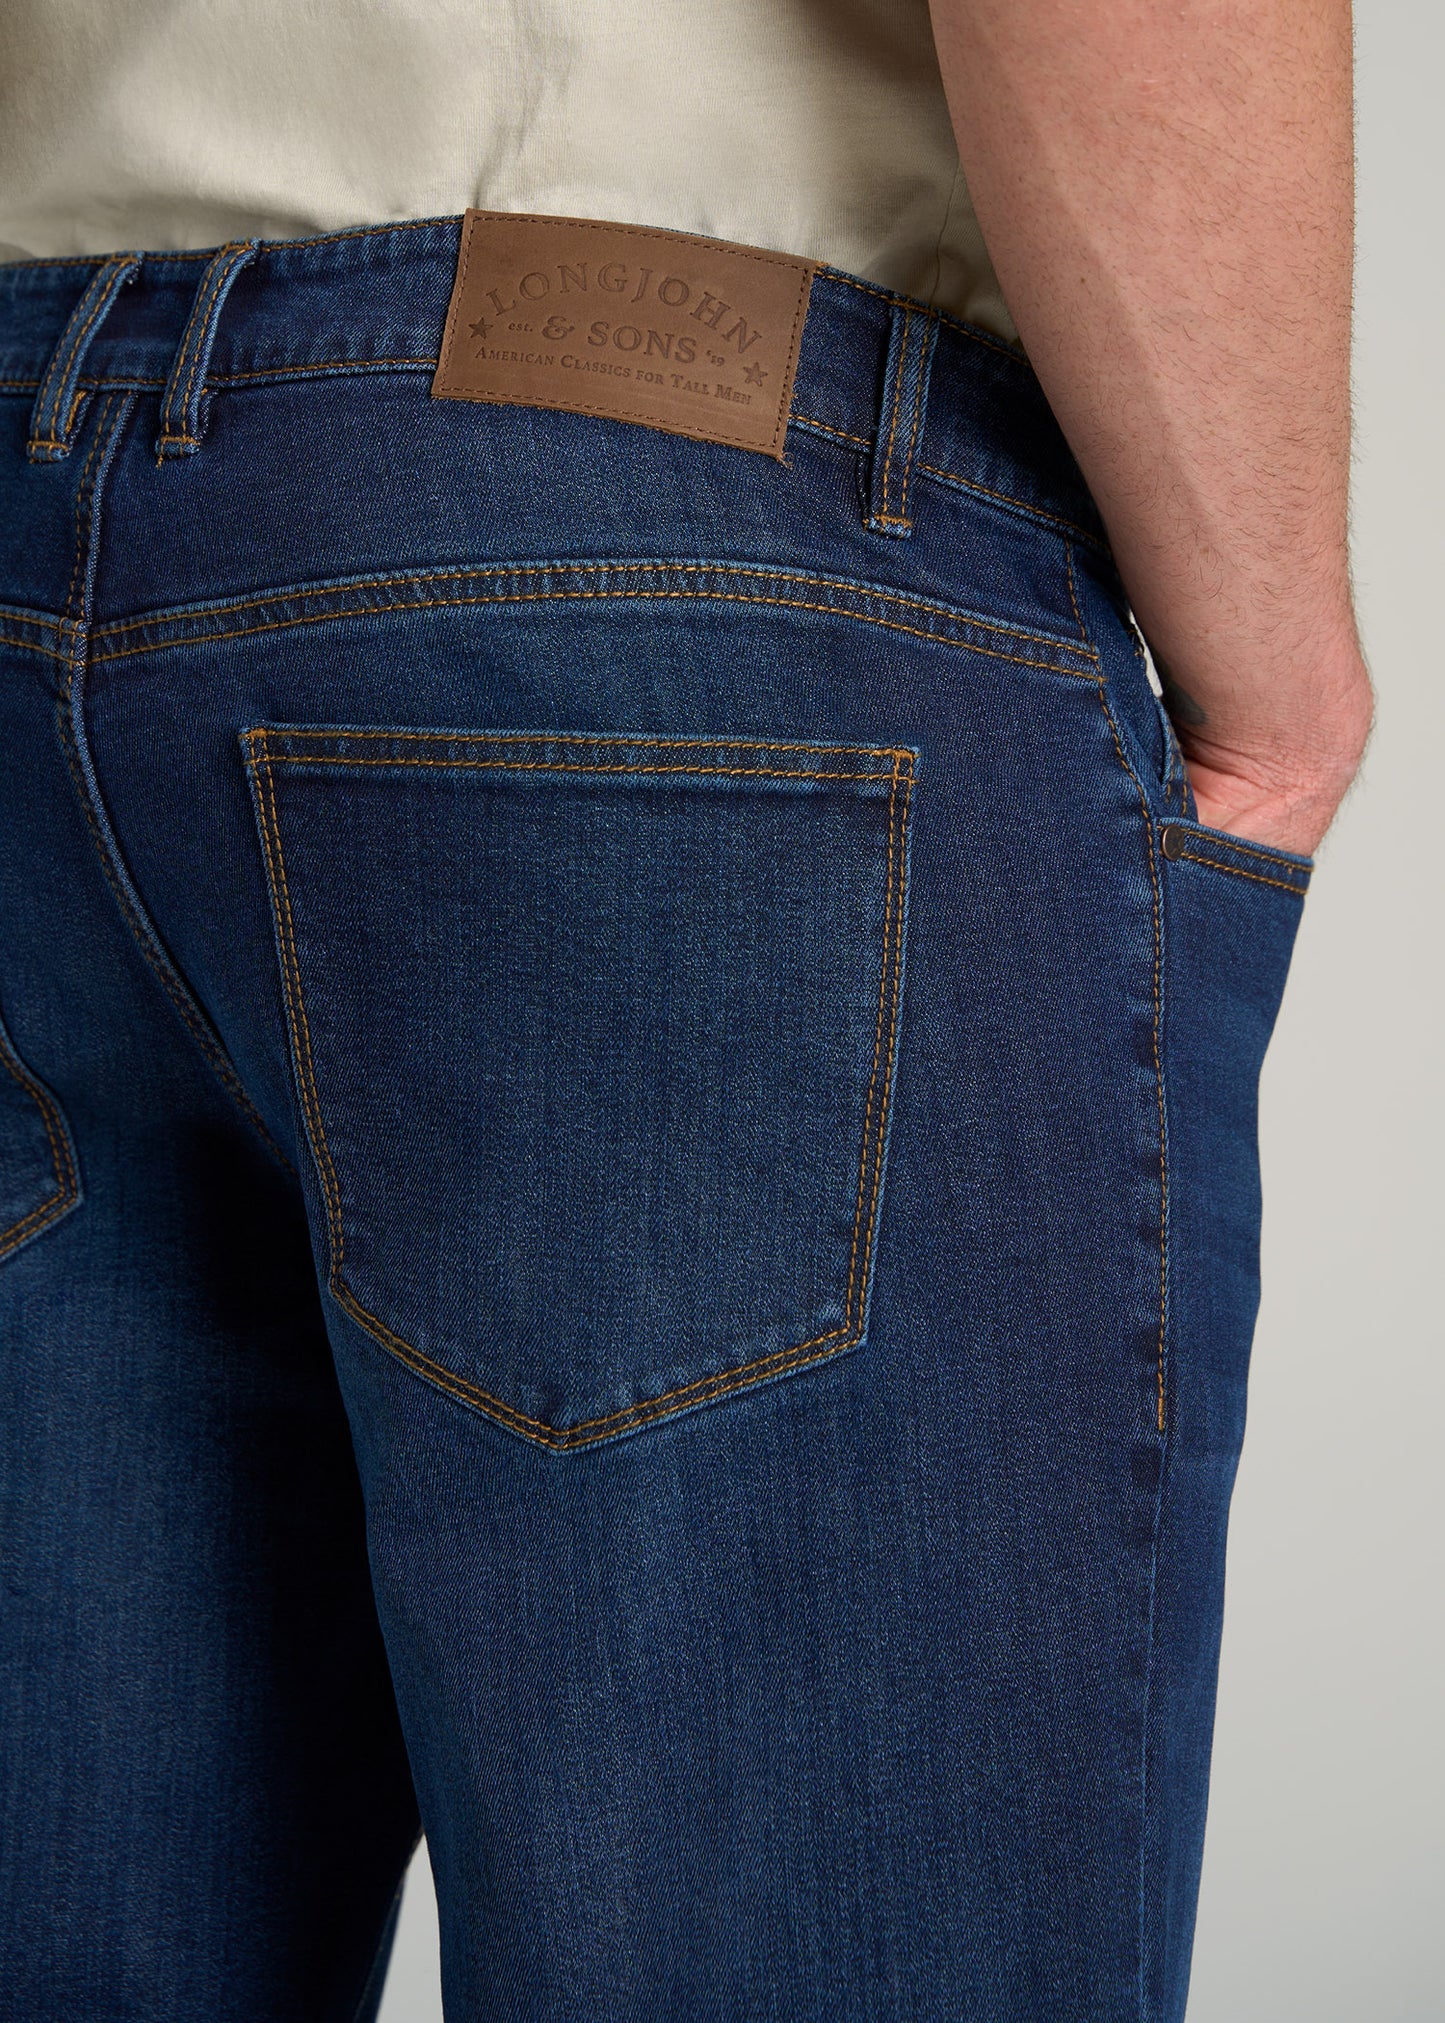 Men\'s Slim Taper Jeans: Slim Taper Fit Carman Charger Blue Jeans – American  Tall